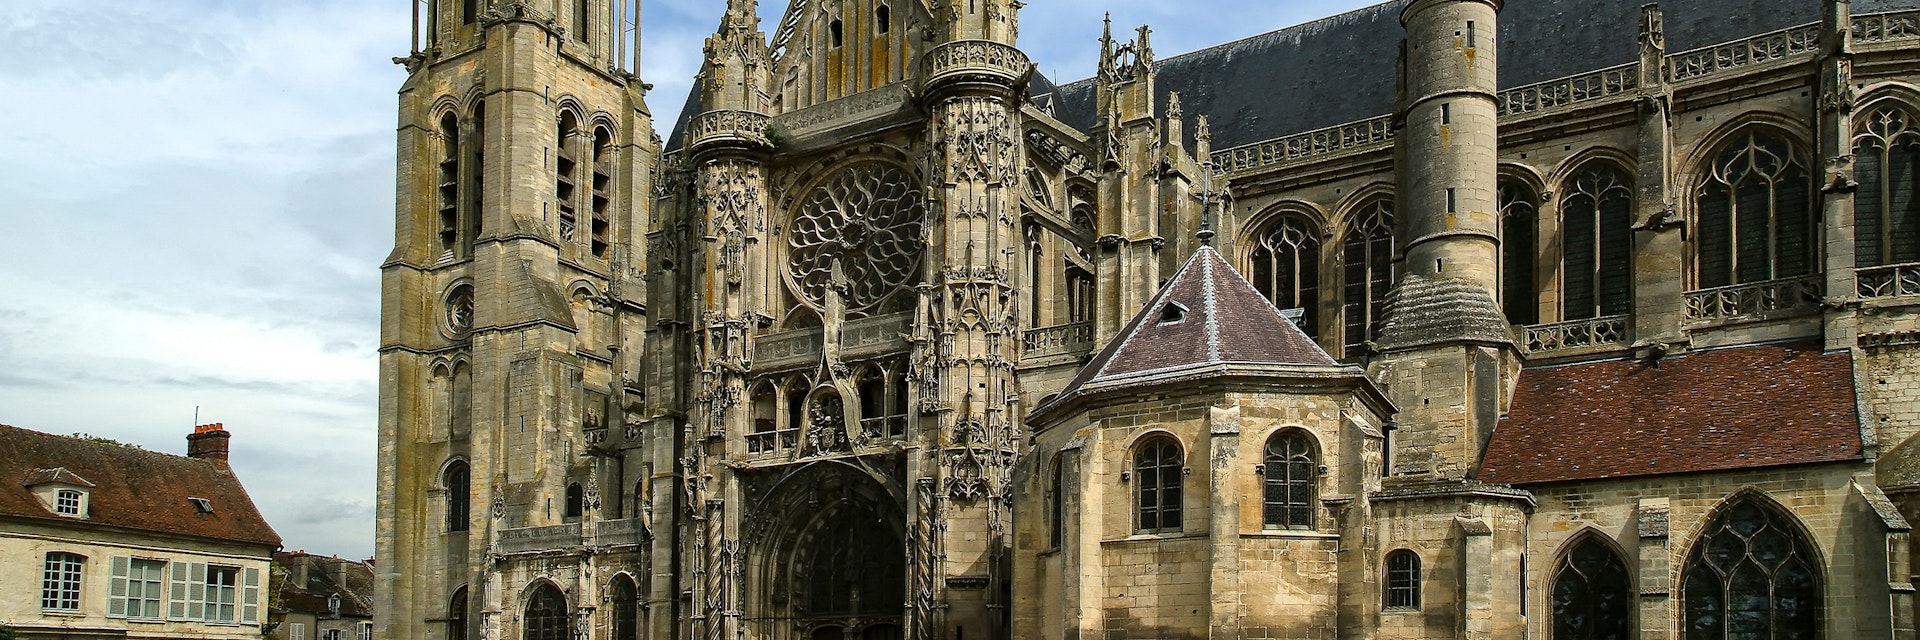 Notre Dame Cathedral of Senlis, France.